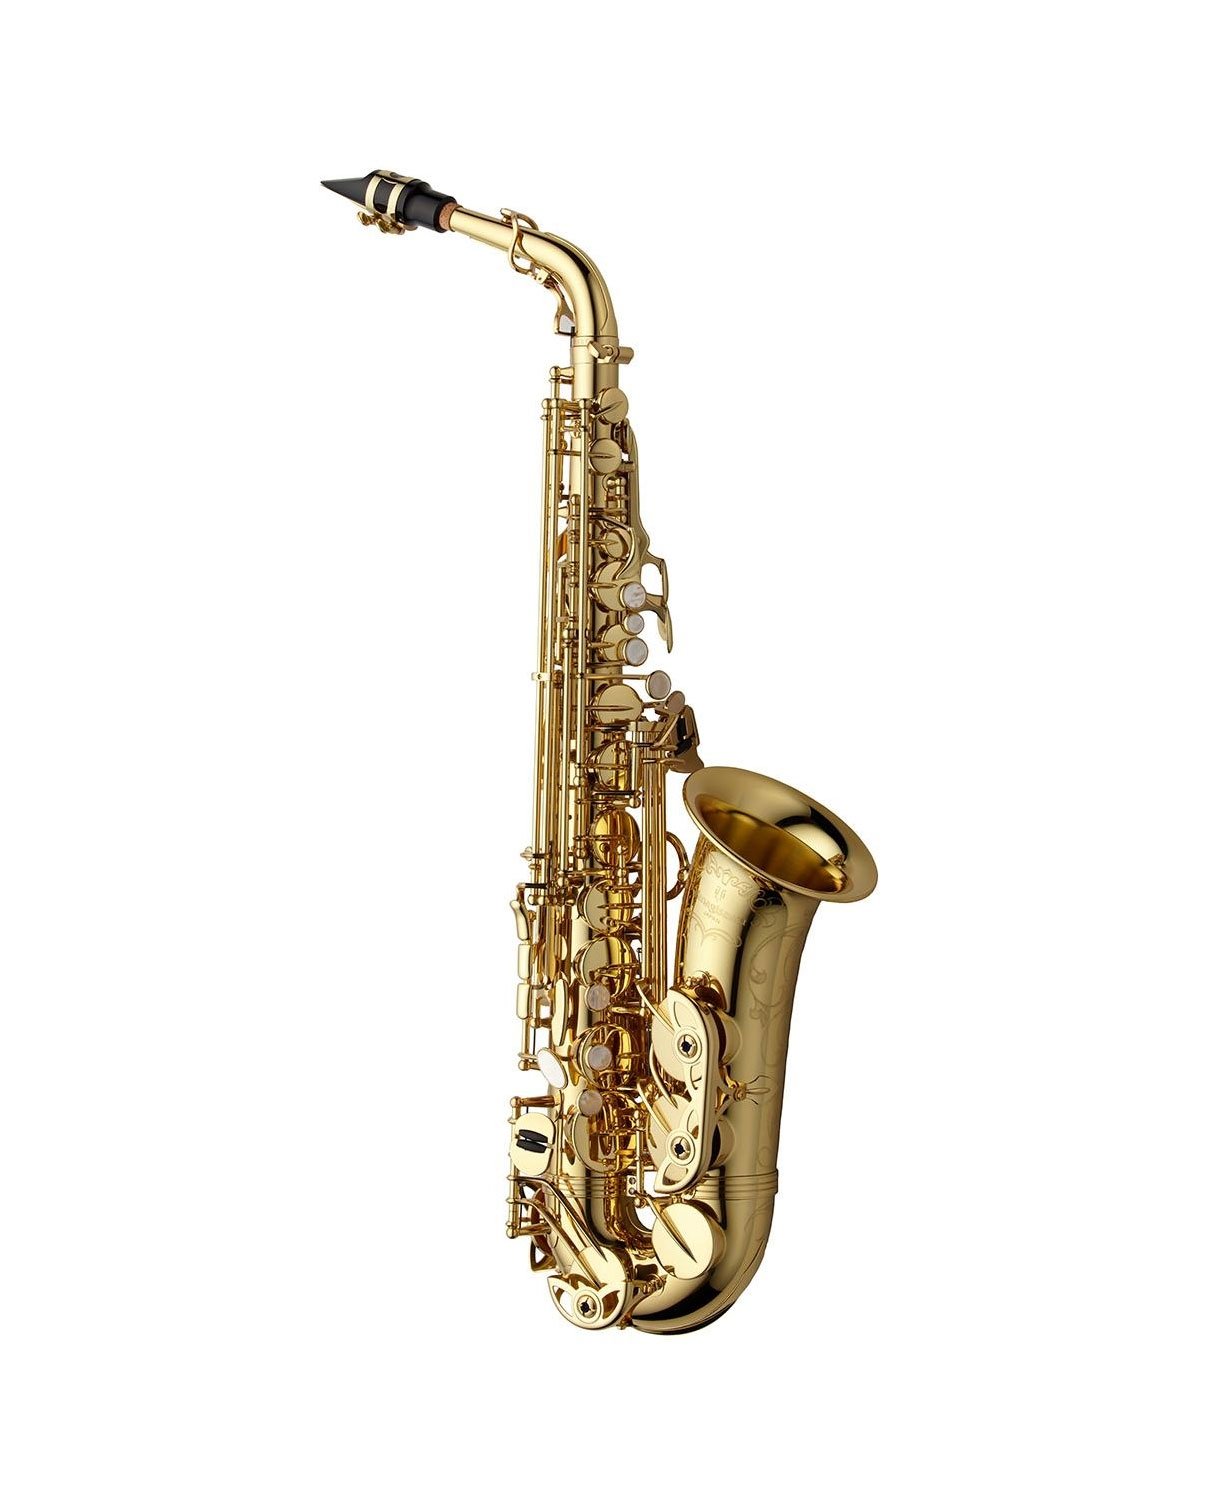 3yanagisawa-awo10-alto-saxophone-gold-lacquer-6015139-1600_1206x1491_152857.jpg